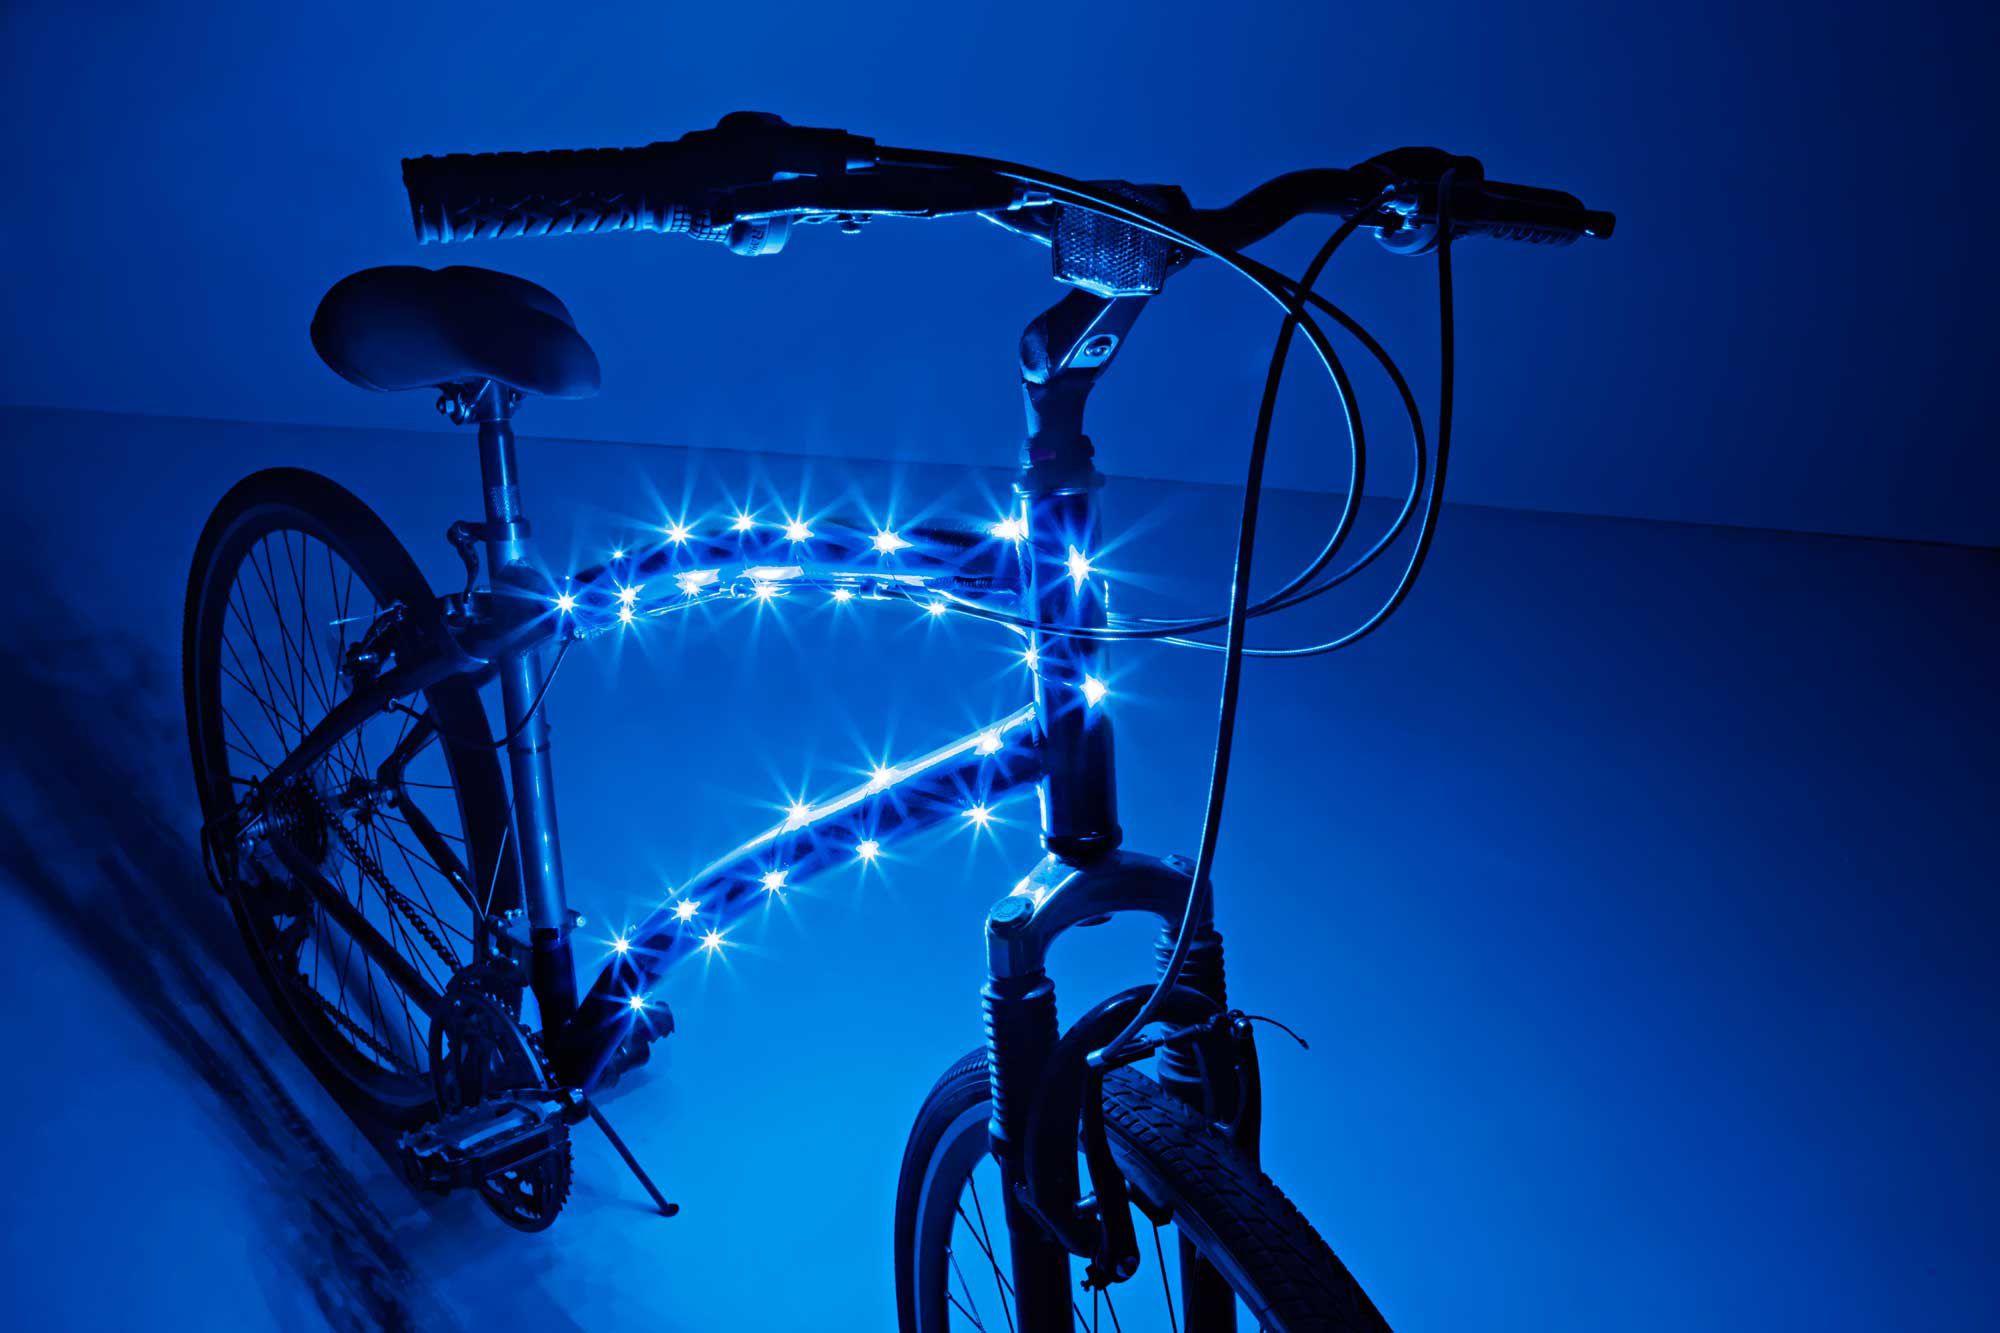 cosmic brightz bike lights